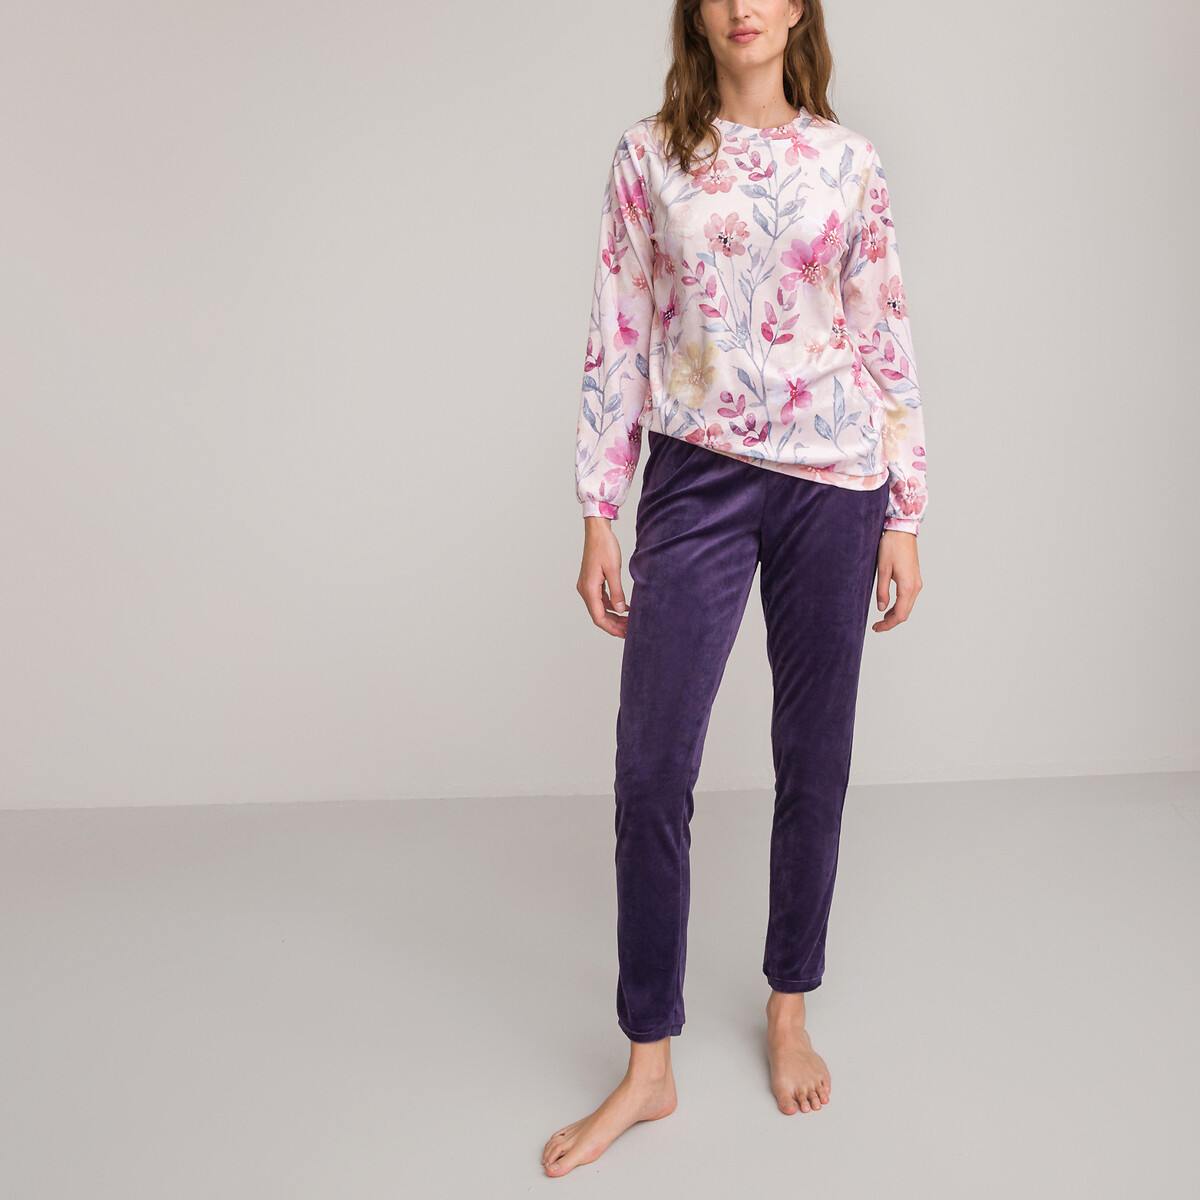 Velour Pyjamas with Floral Print Top